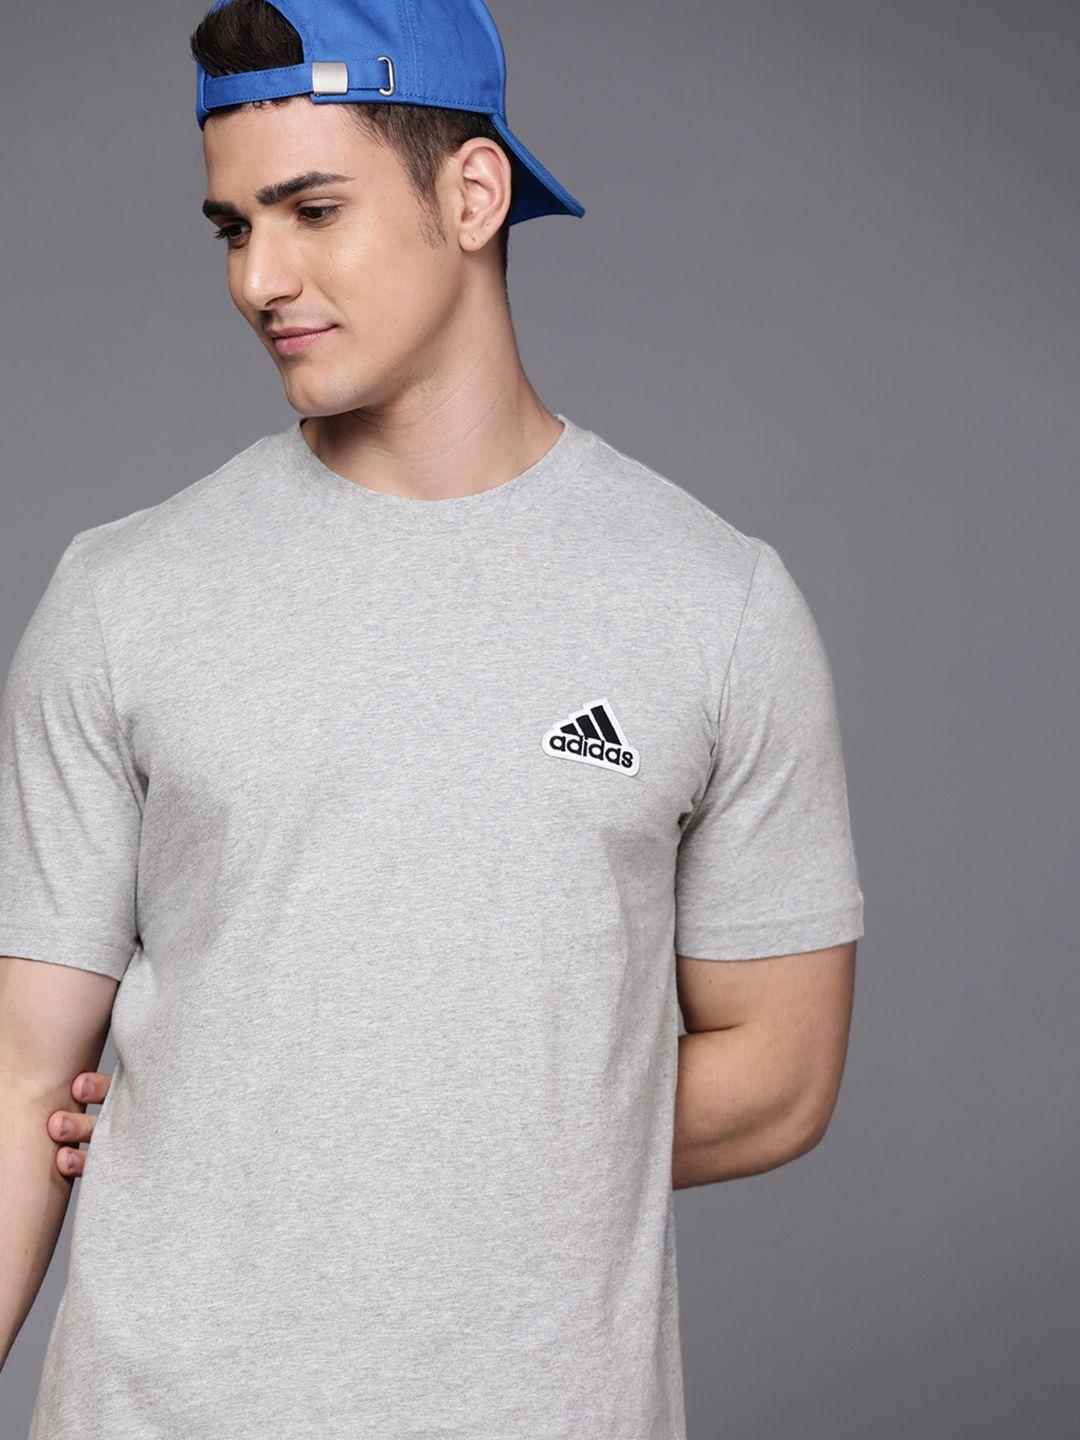 adidas men grey melange brand logo applique pure cotton sustainable t-shirt